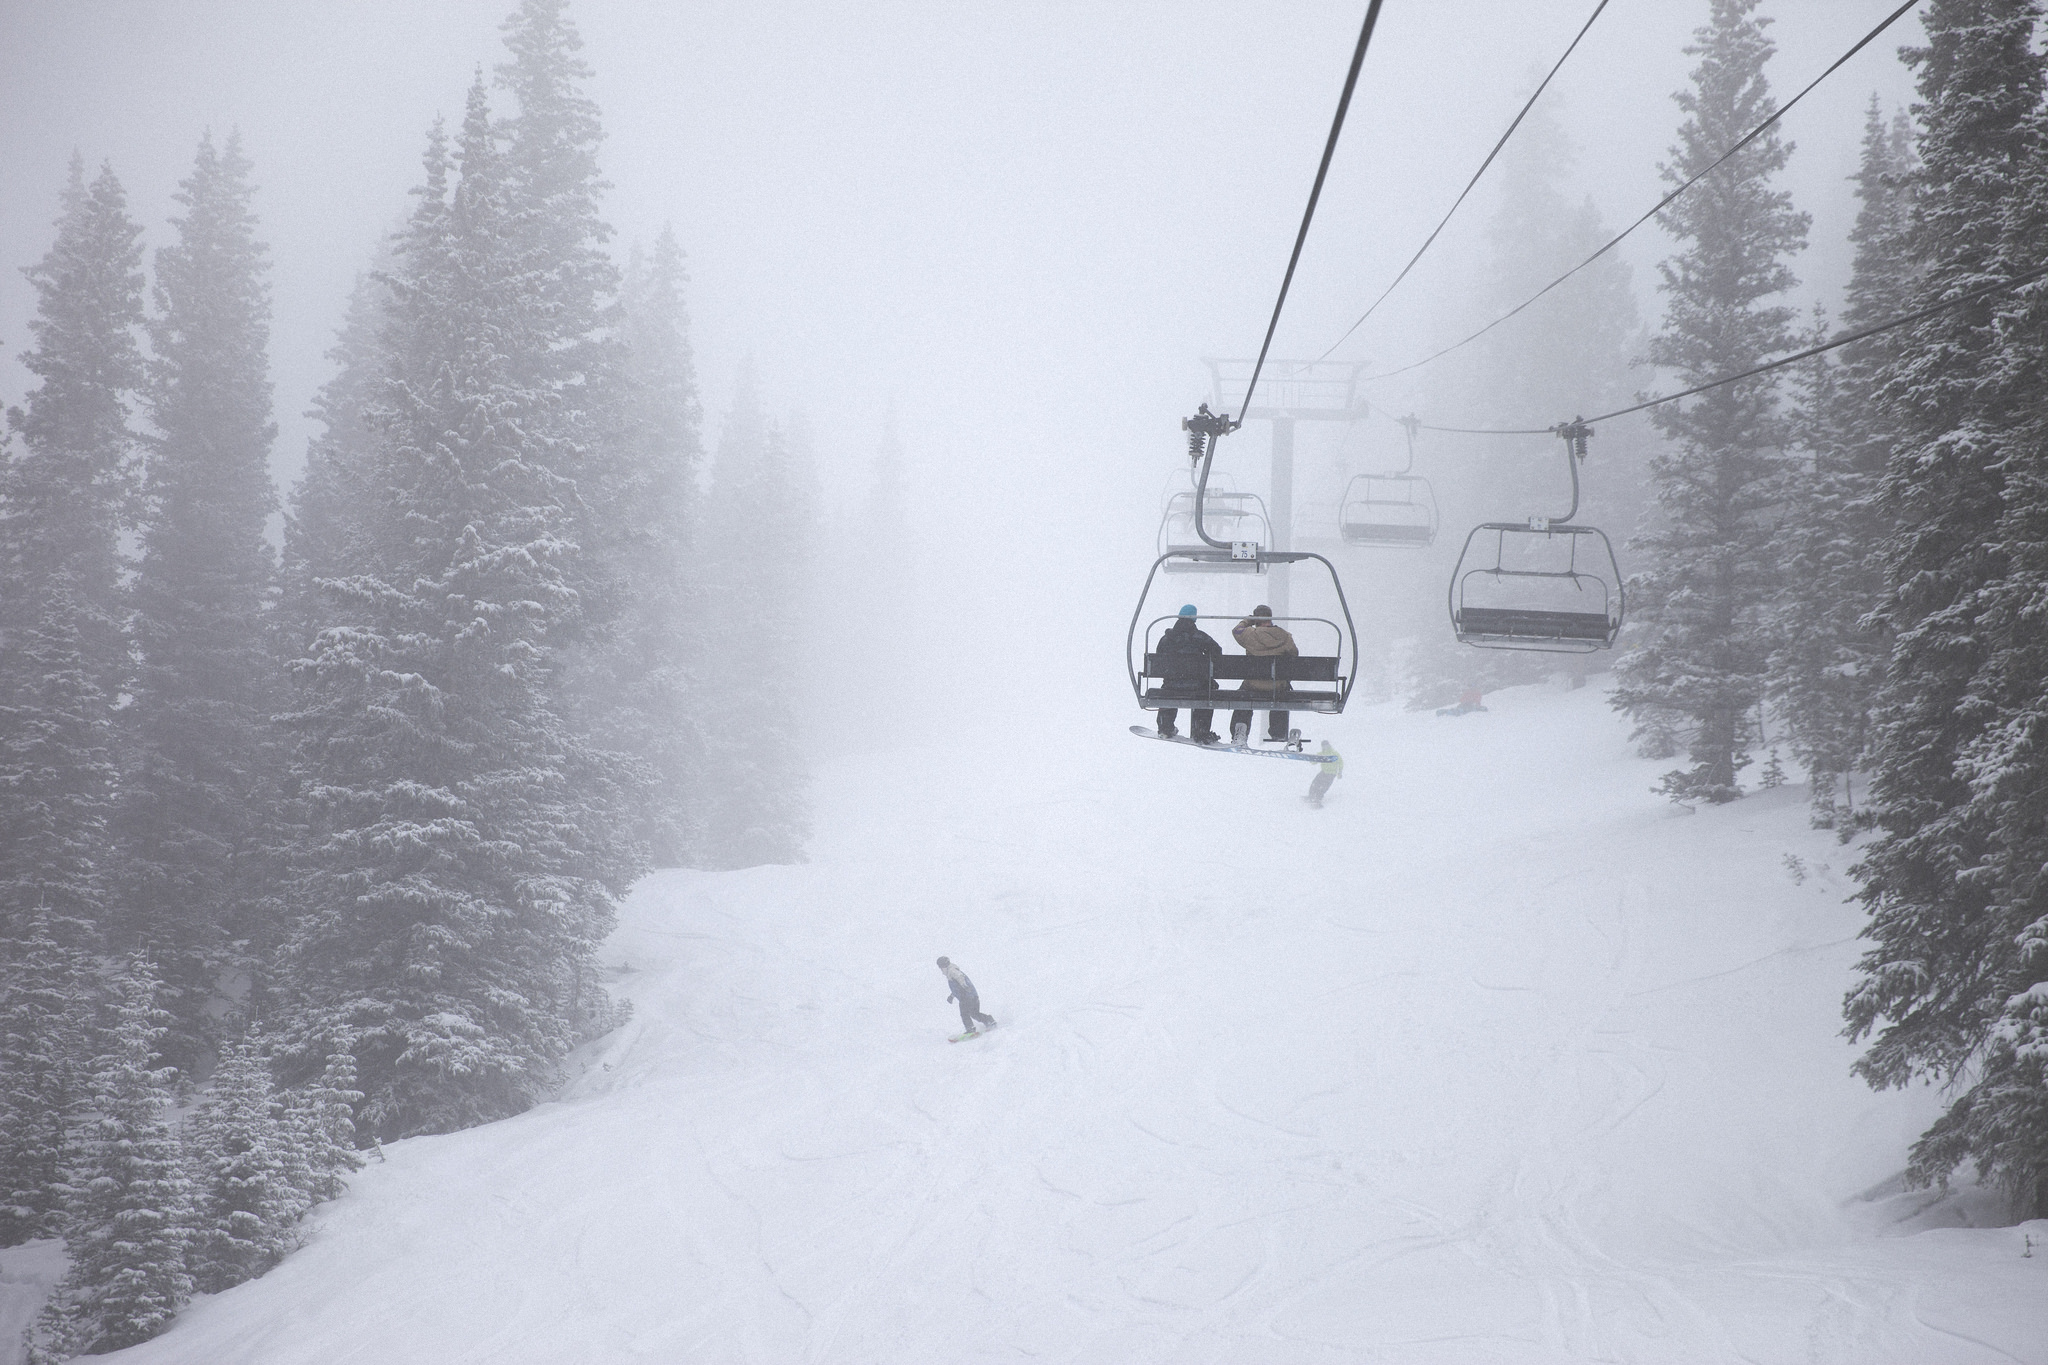 Photo: Skiing Snowboarding Aspen Snowmass Flickr CC